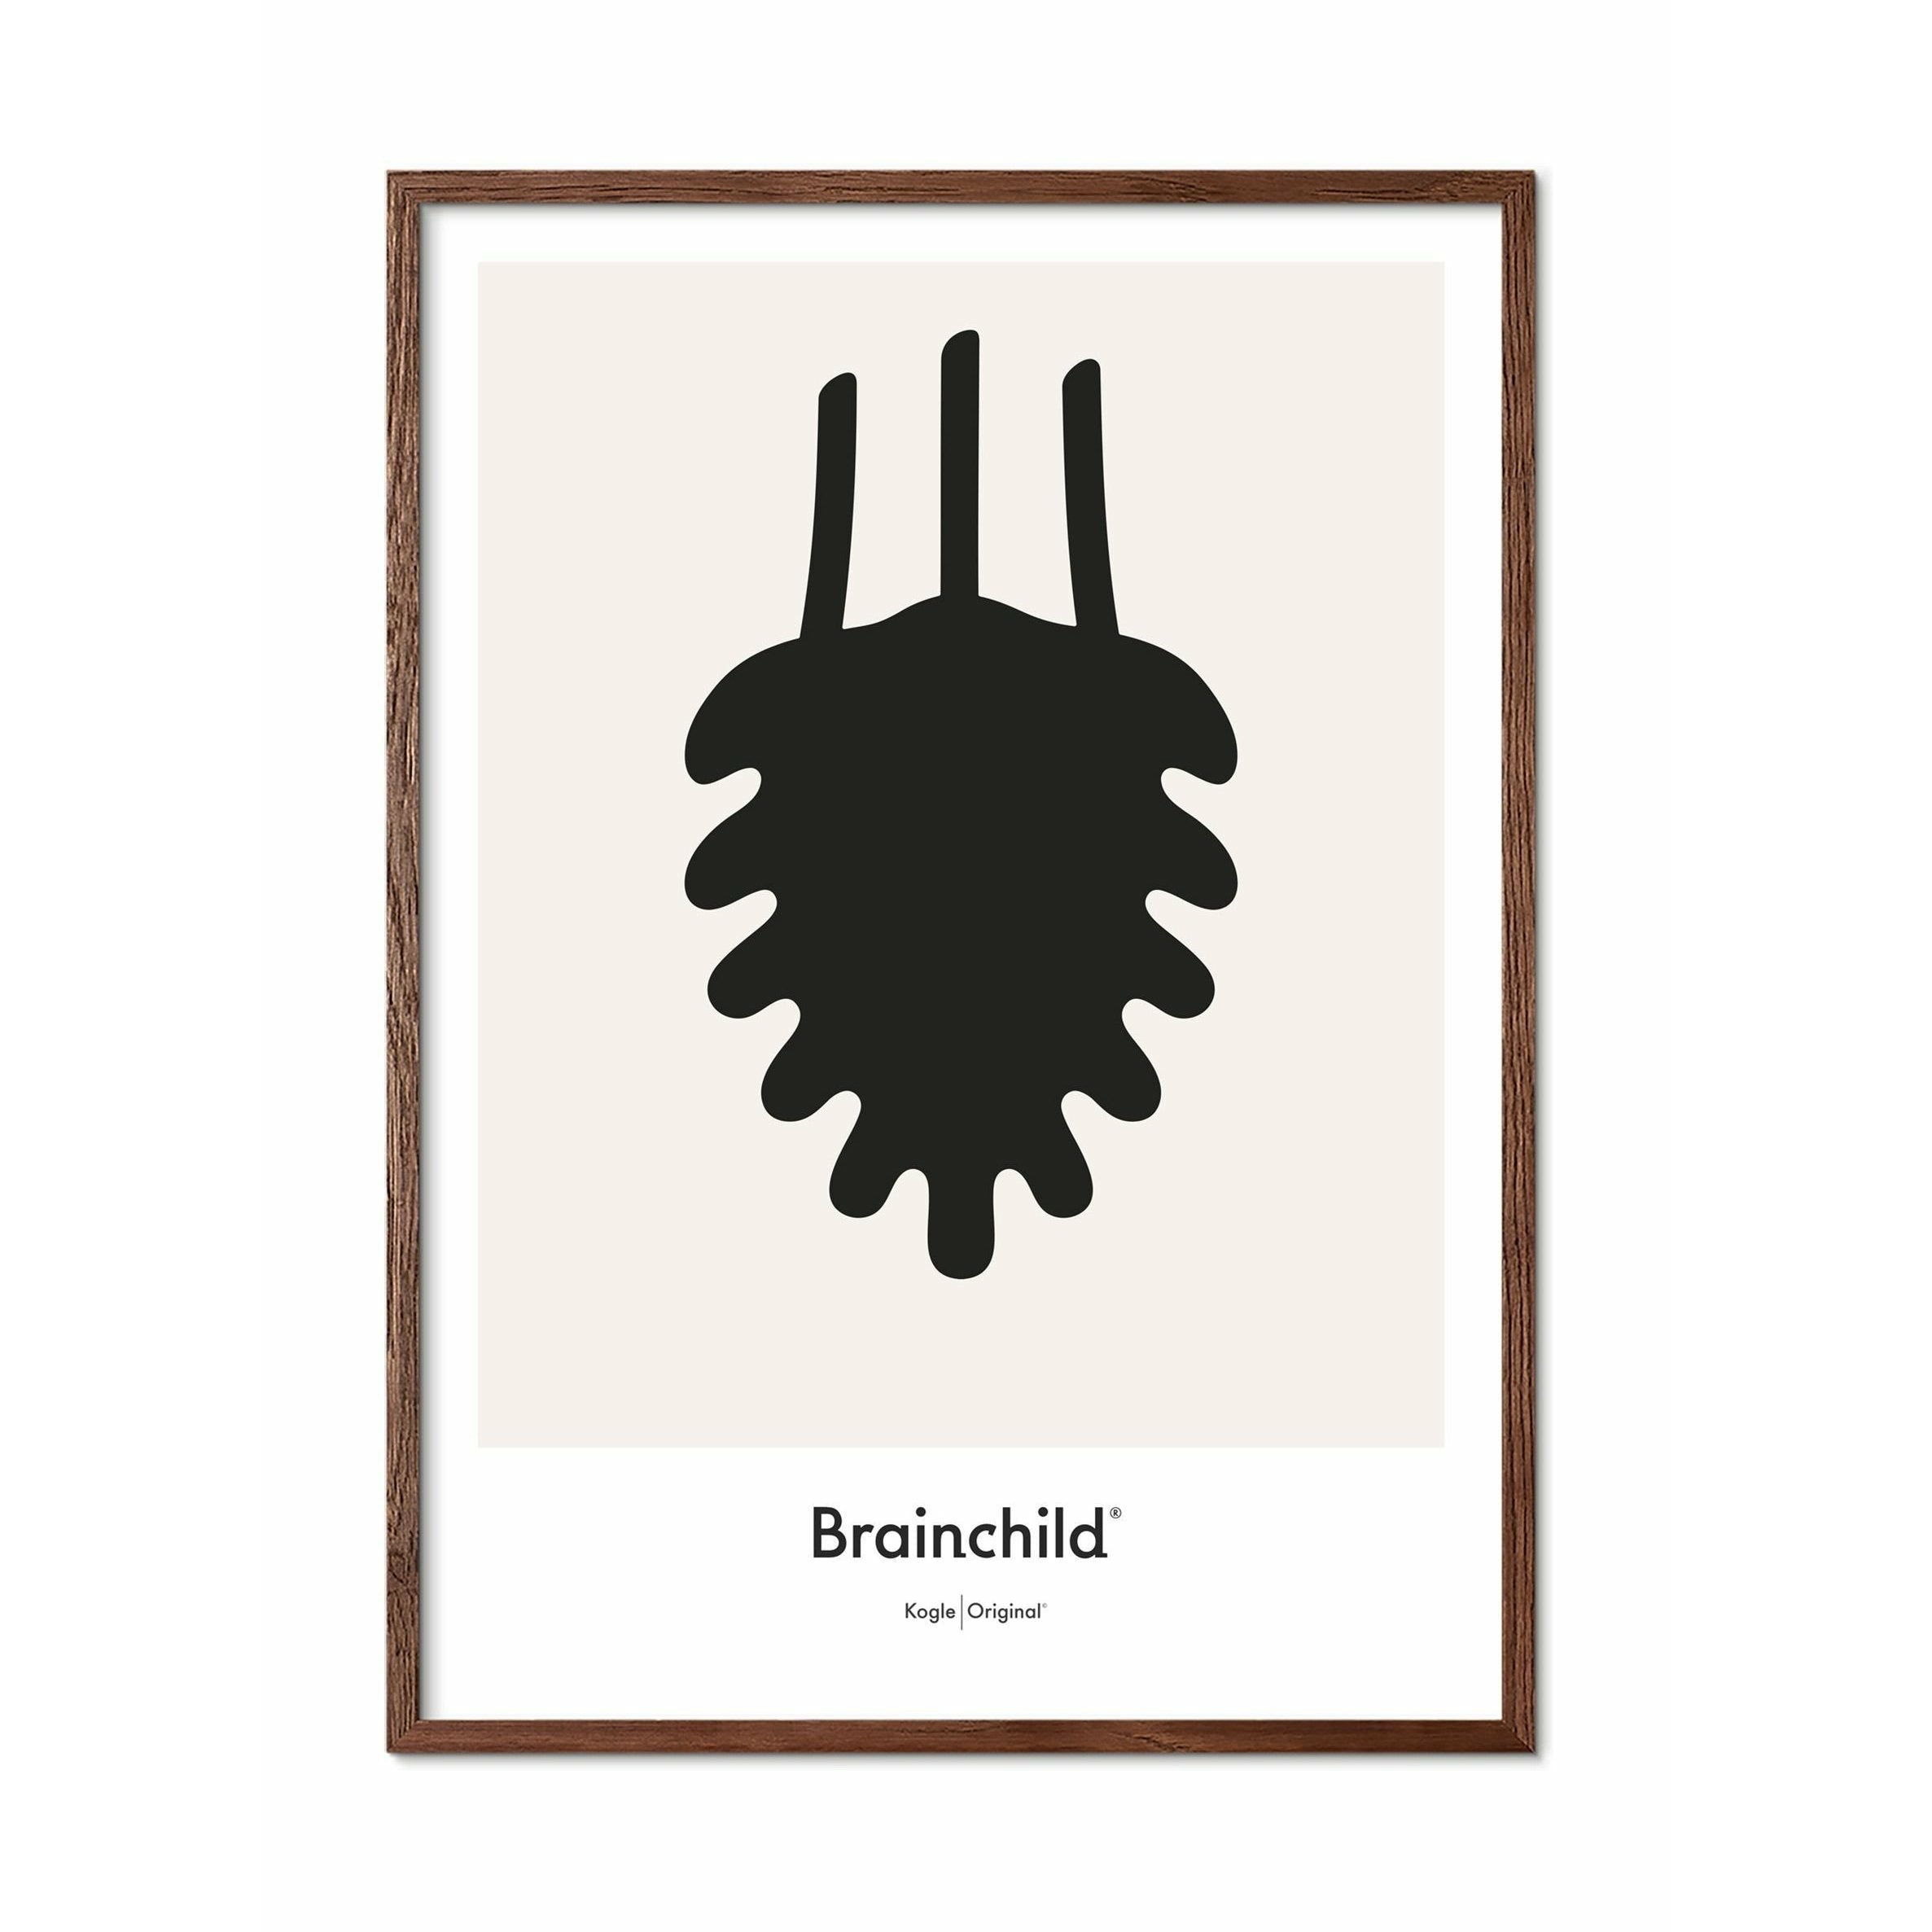 Brainchild Kogle Designikon Plakat, Ramme I Mørkt Træ 50X70 Cm, Grå